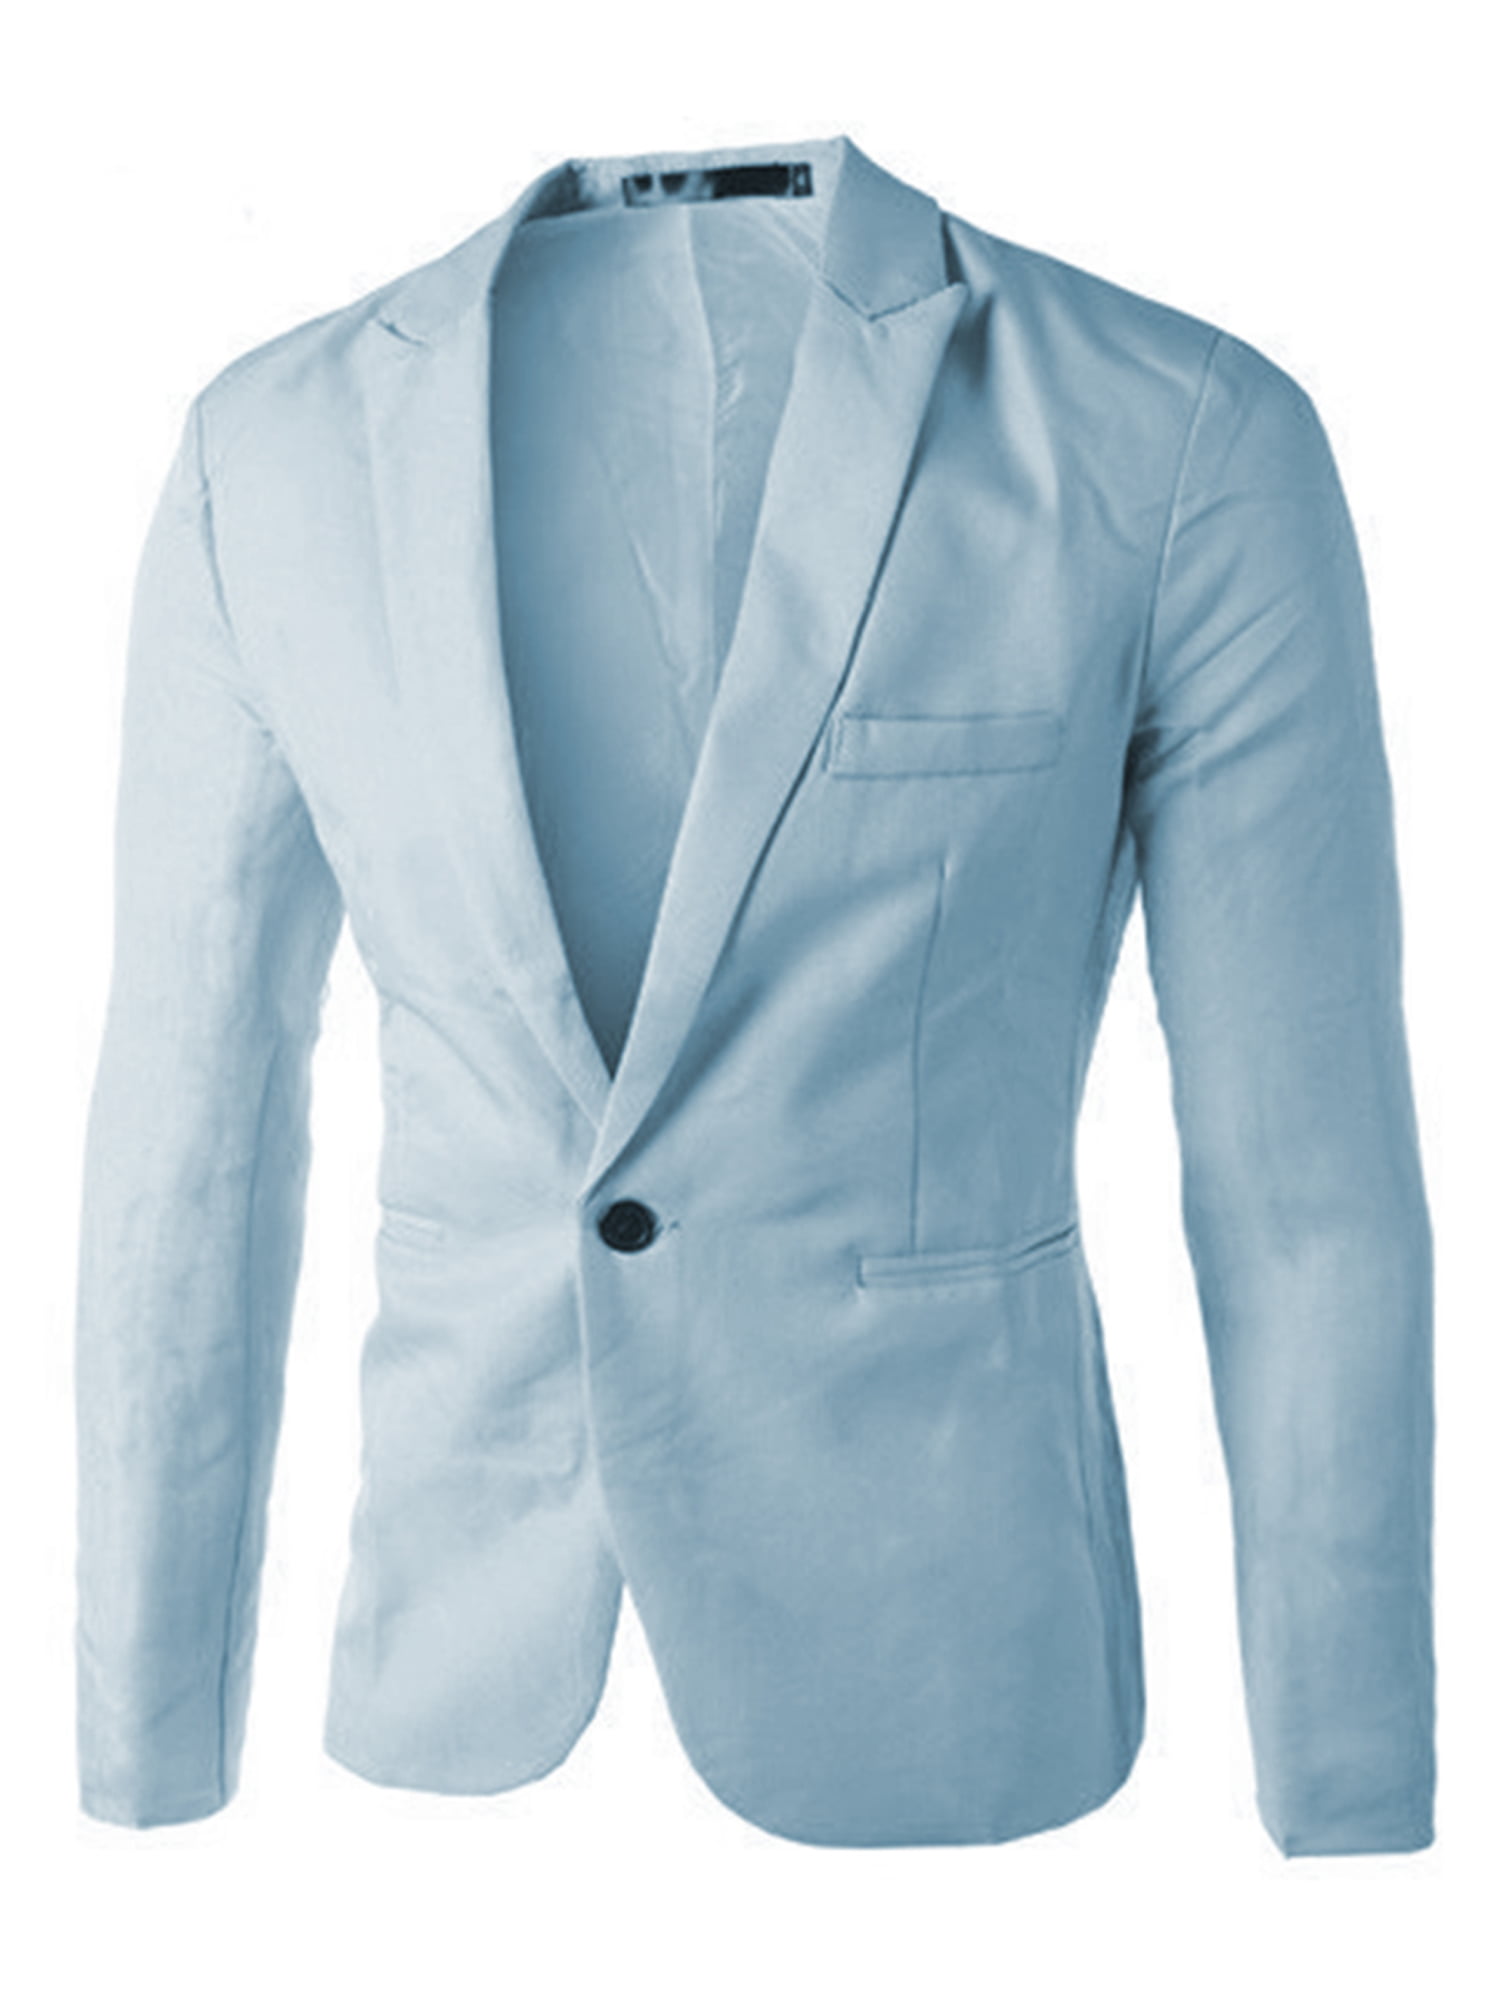 PHSHY Men's Casual Suit Blazer Jackets Lightweight Tailored One Button Work Business Sport Coat Outwear Tops 